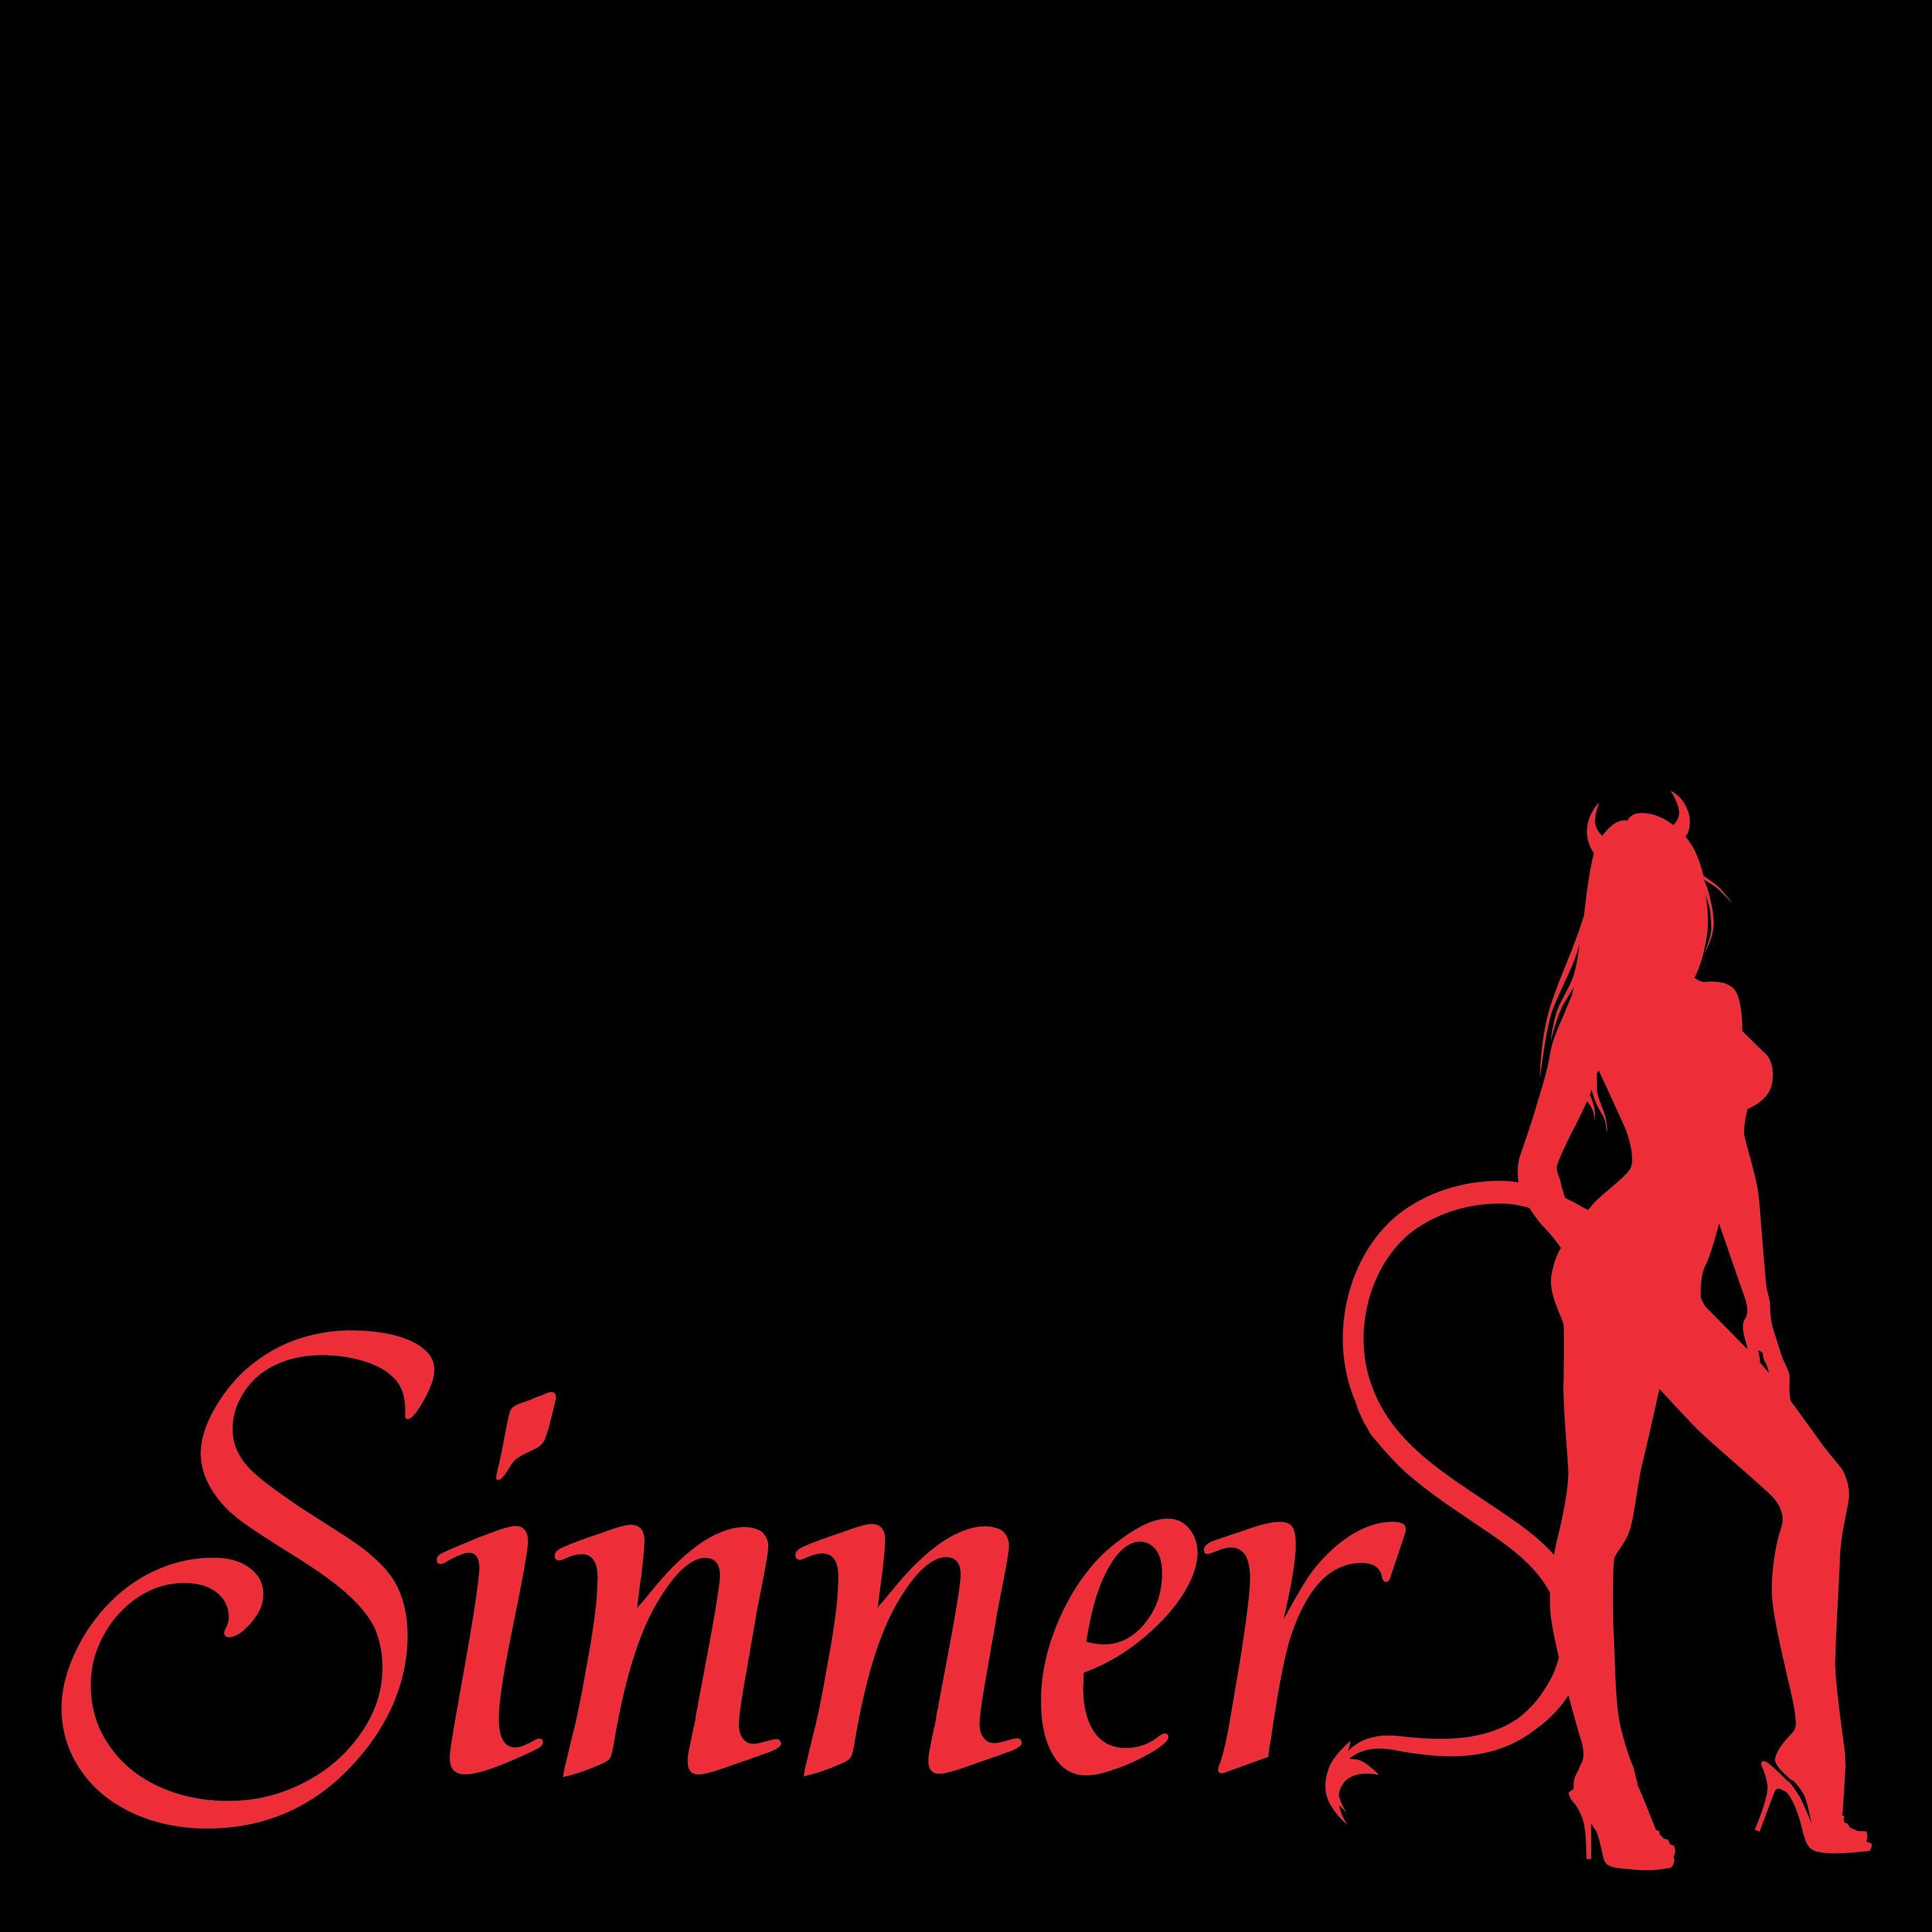 Sinner Logo - Sinners' Band Logo. Olivia Cunning's Blog